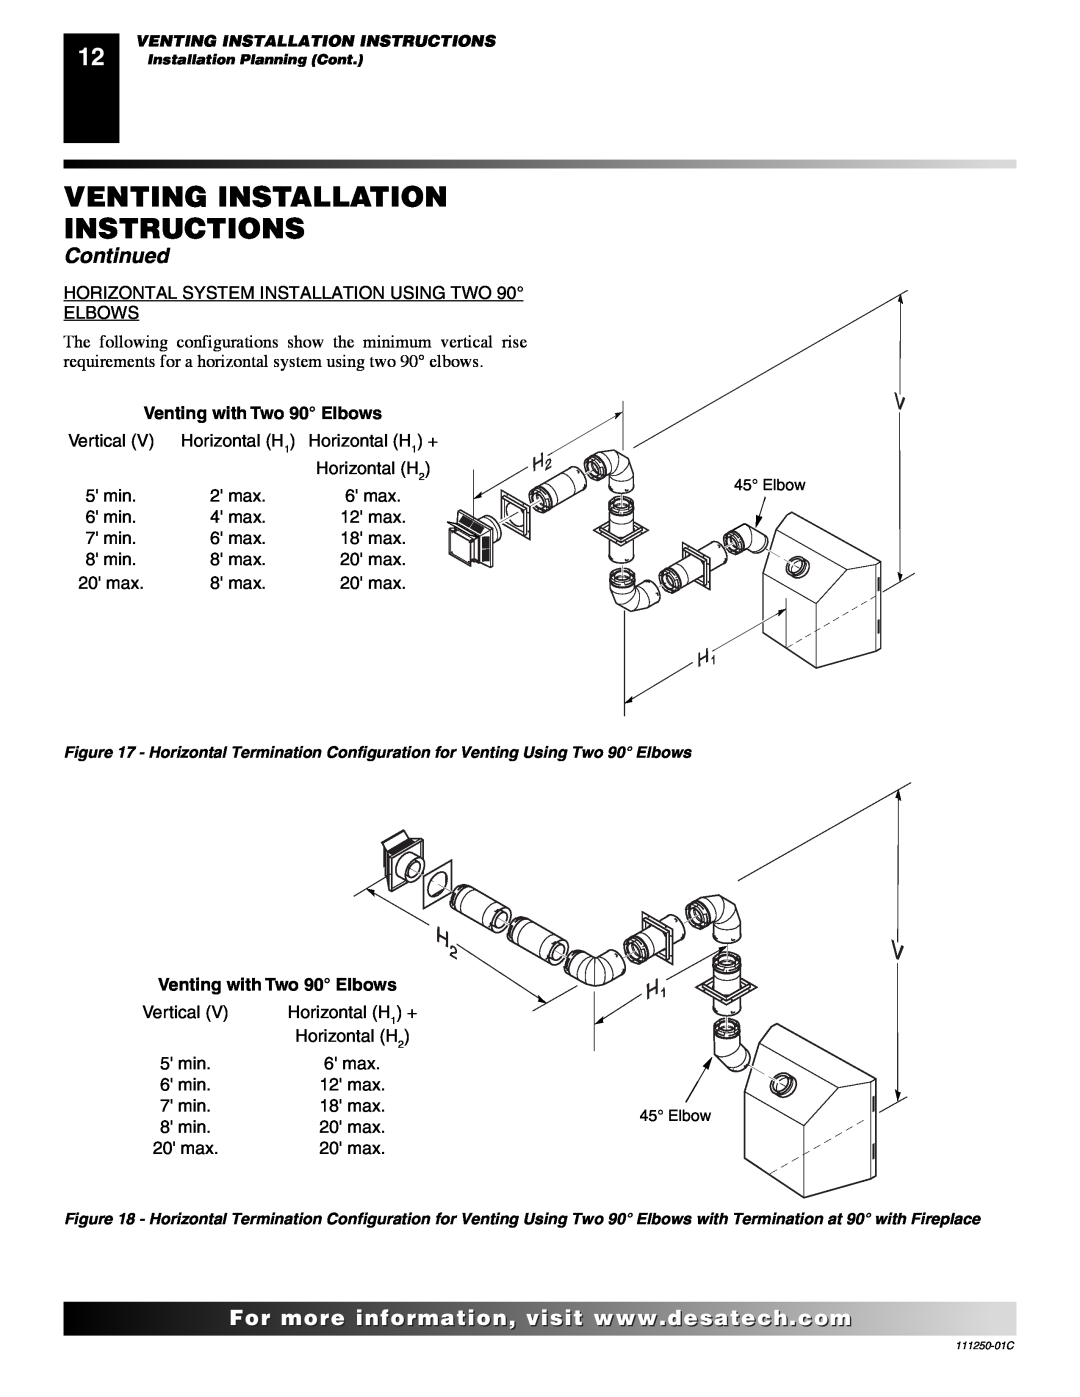 Desa (V)T36NA SERIES installation manual Venting Installation Instructions, Continued, Venting with Two 90 Elbows 